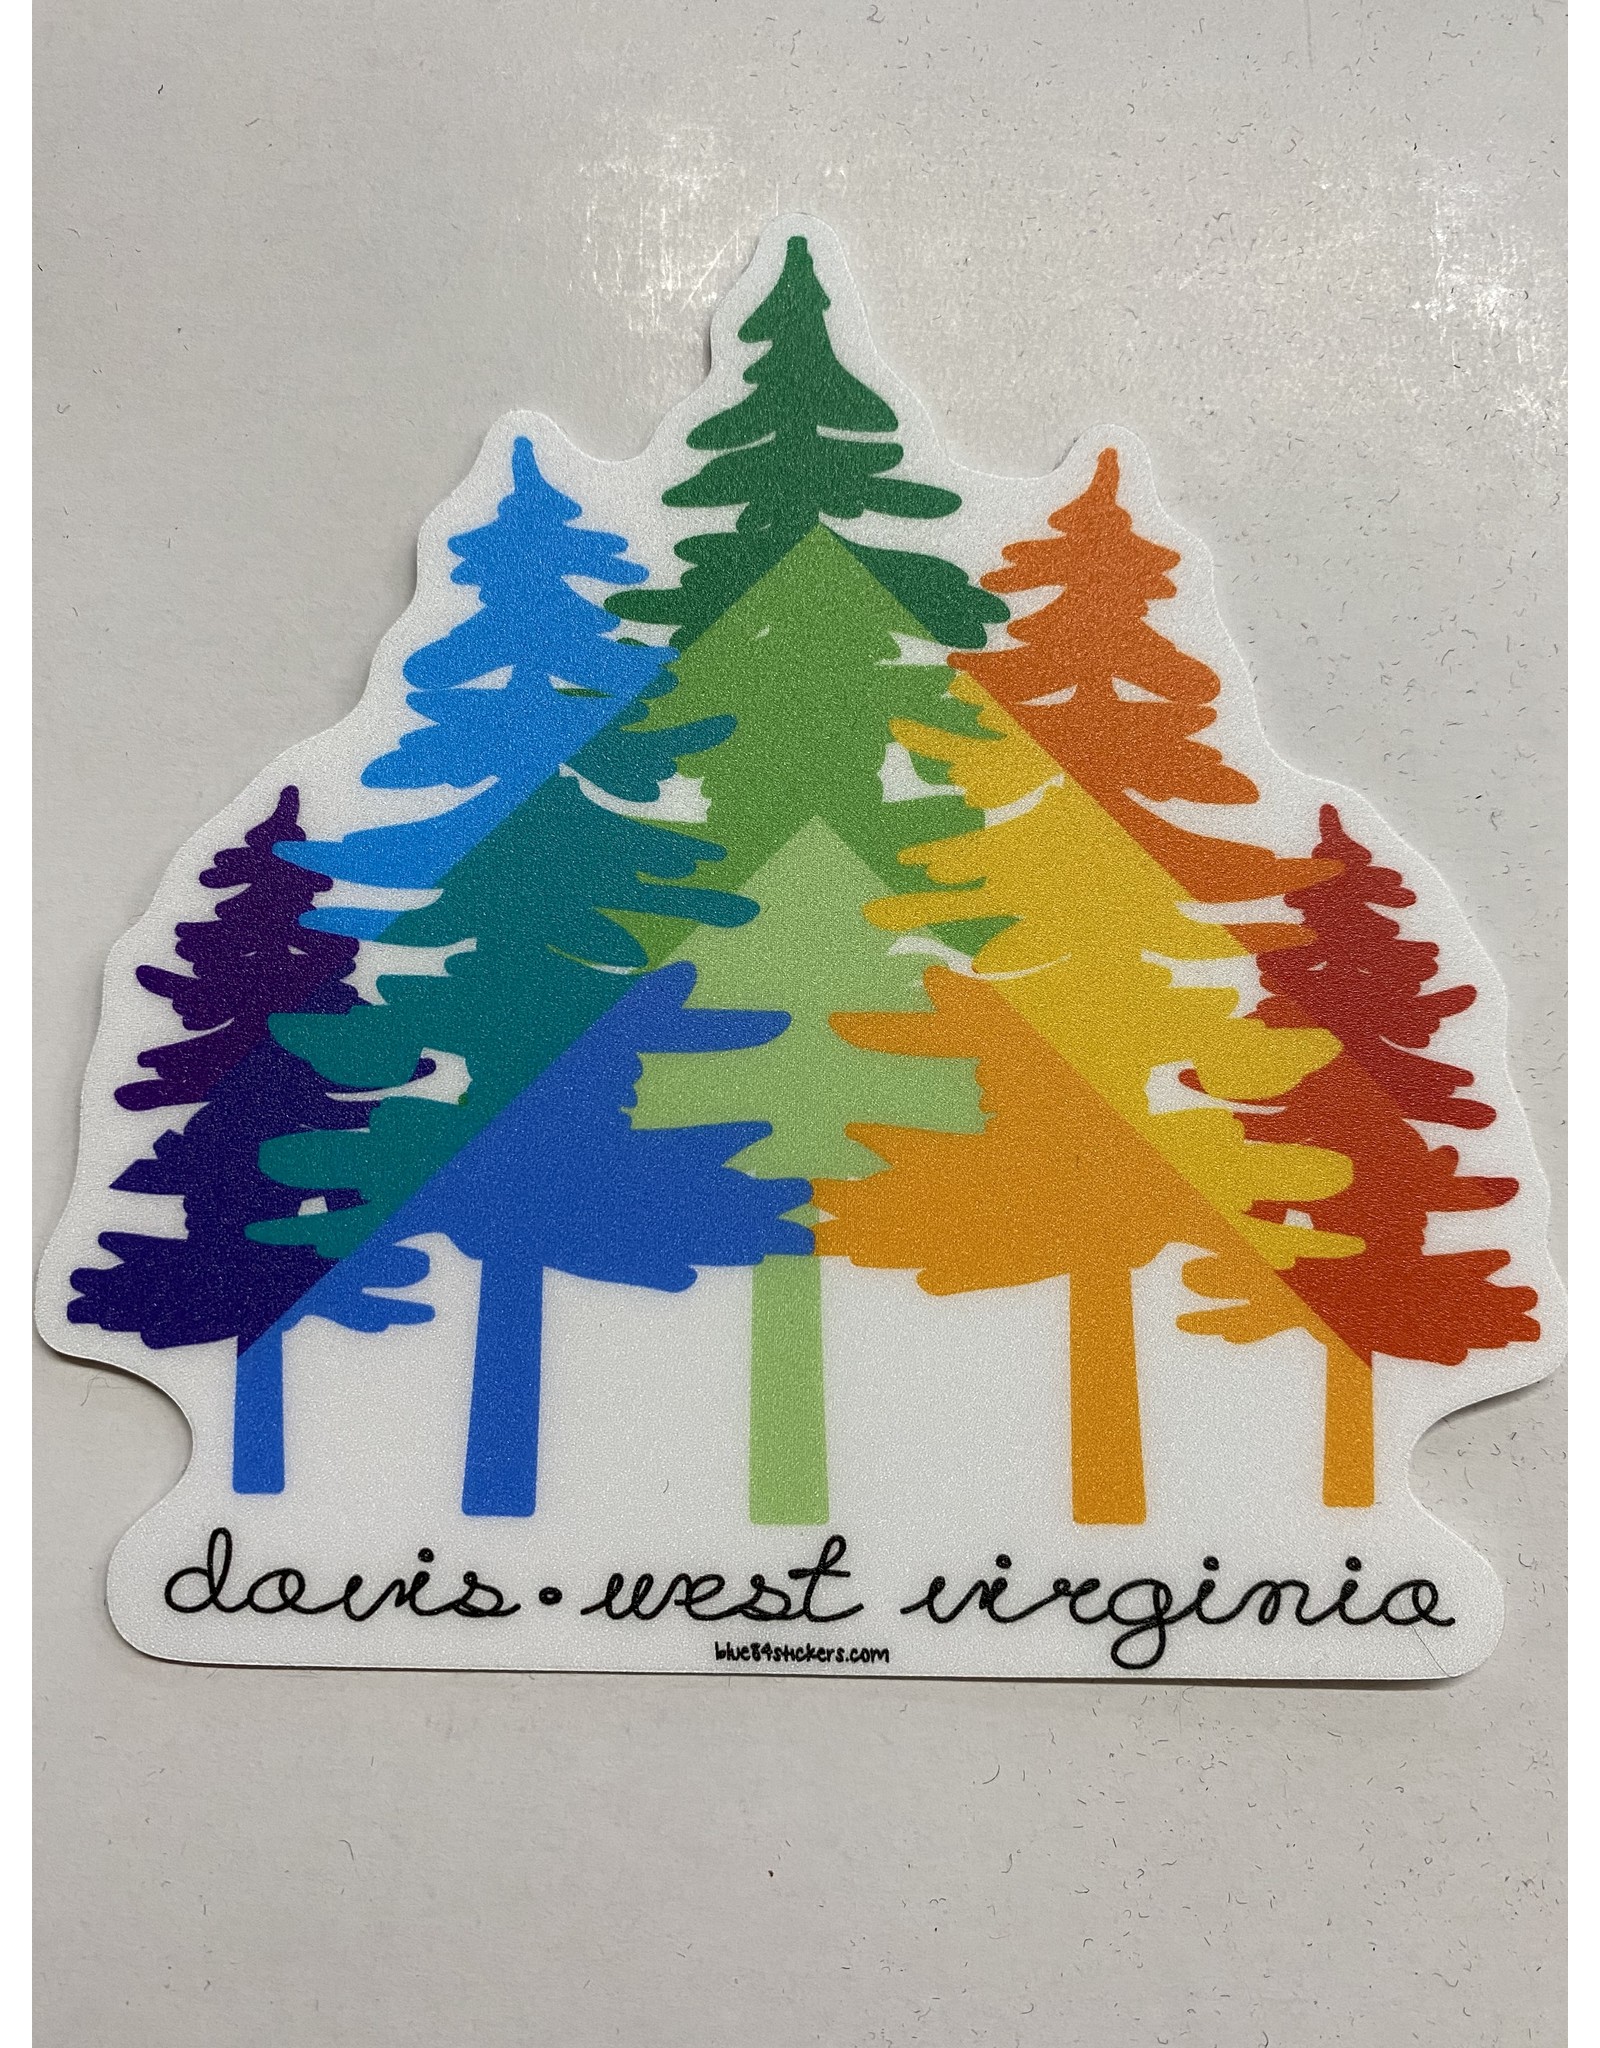 Blue84 Sticker - Rainbow Pines